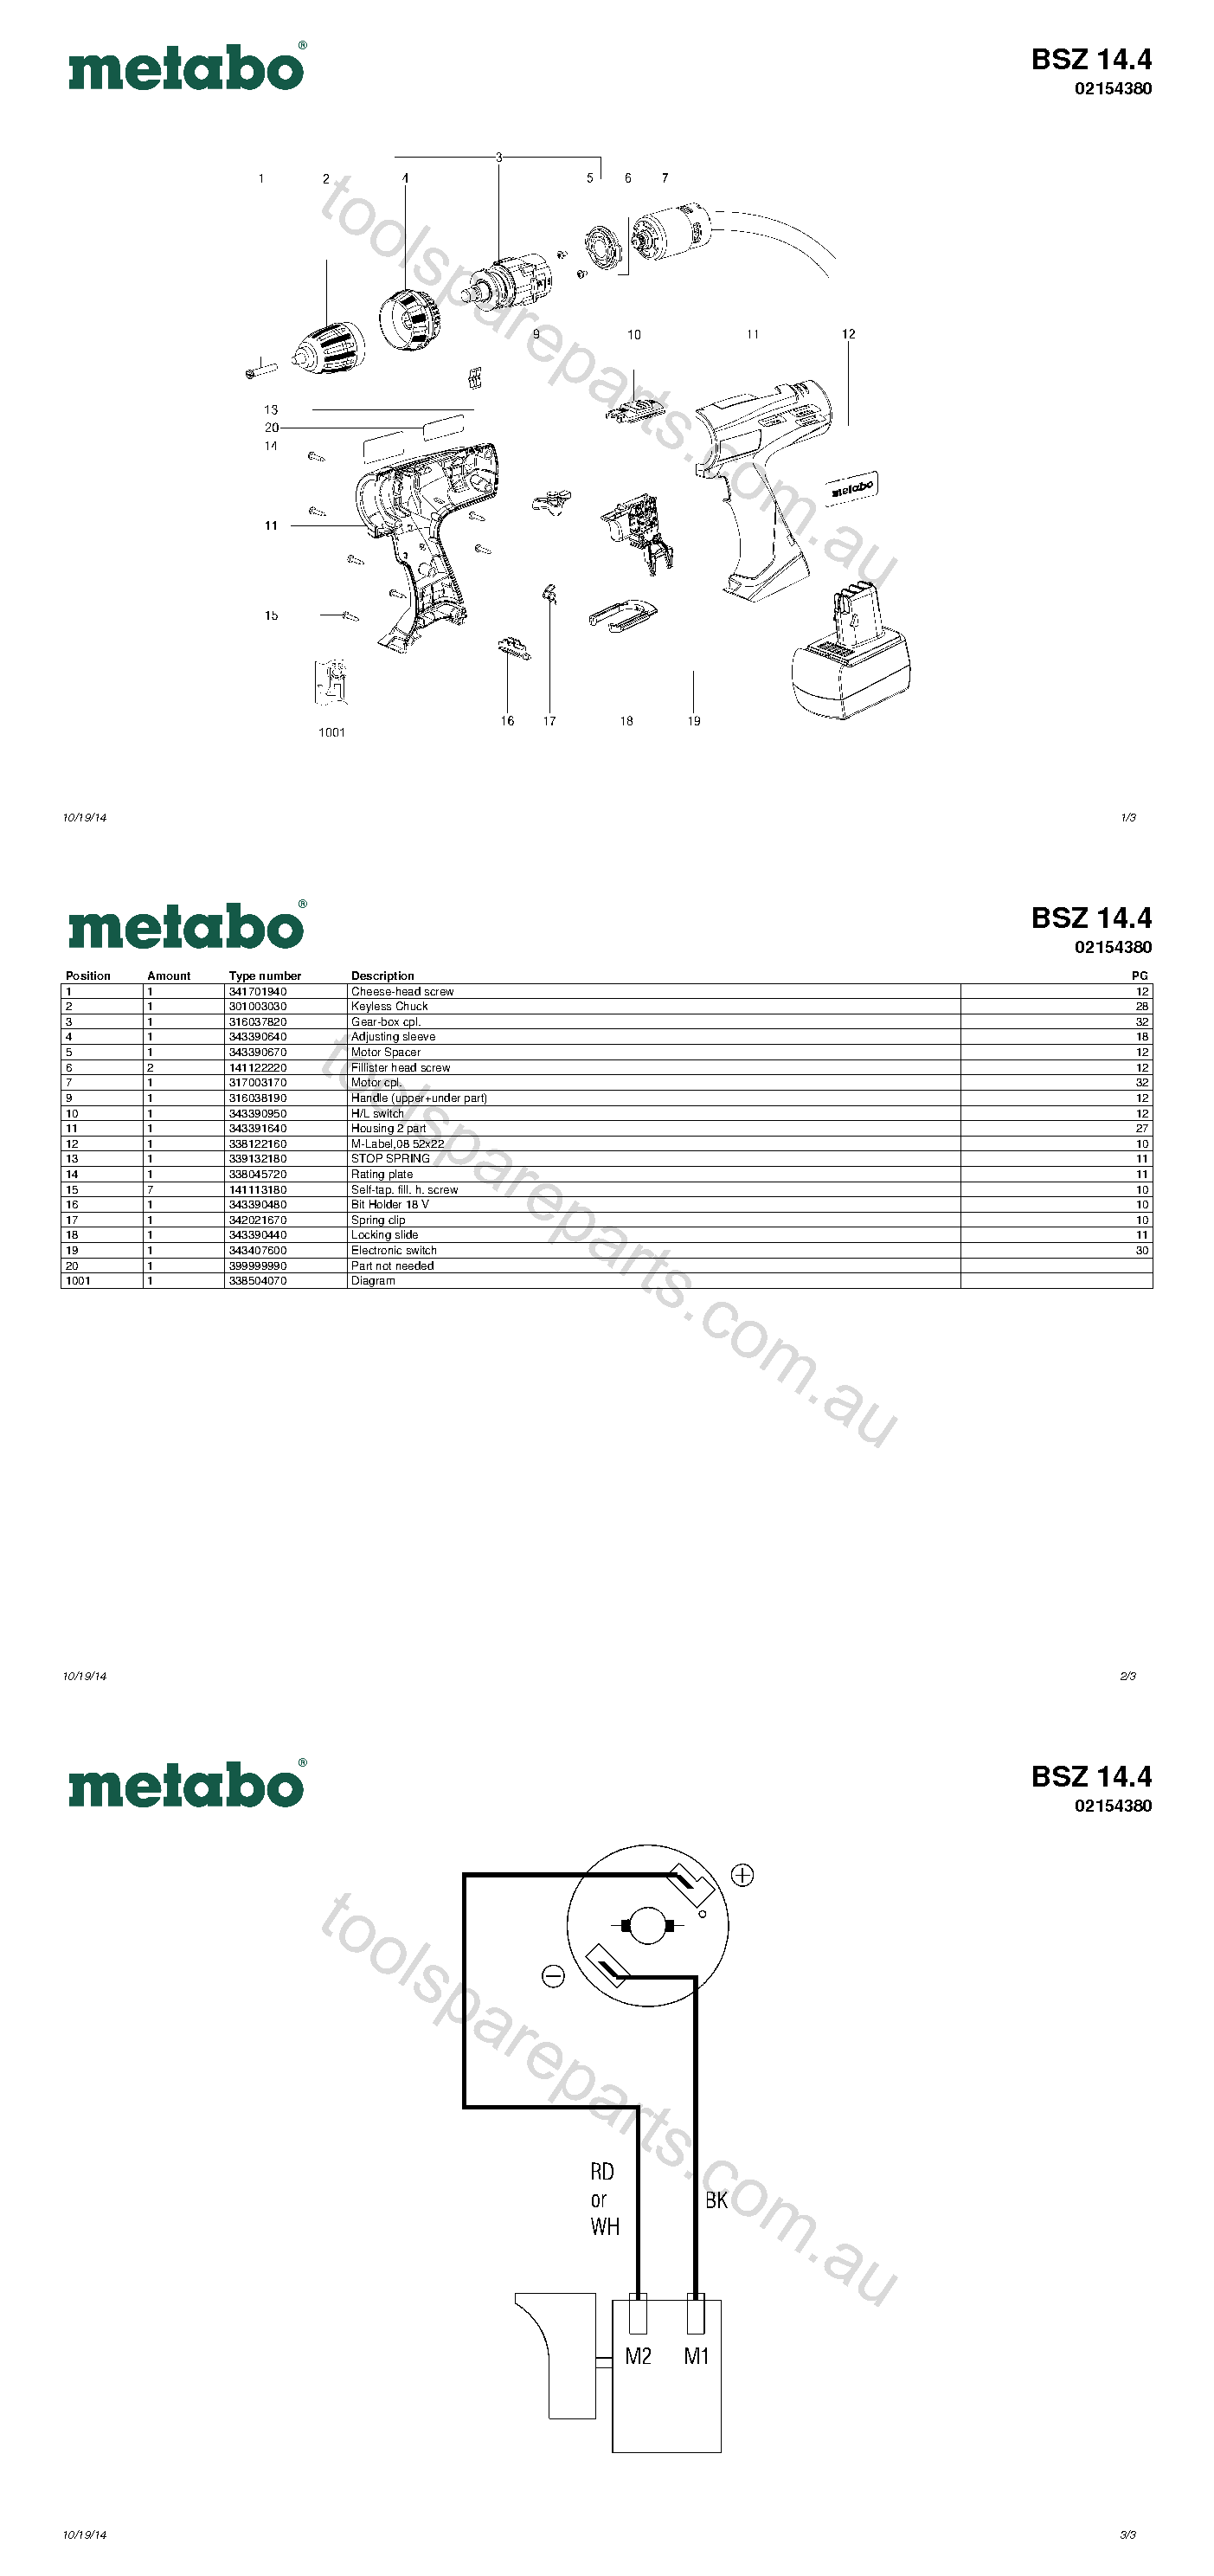 Metabo BSZ 14.4 02154380  Diagram 1